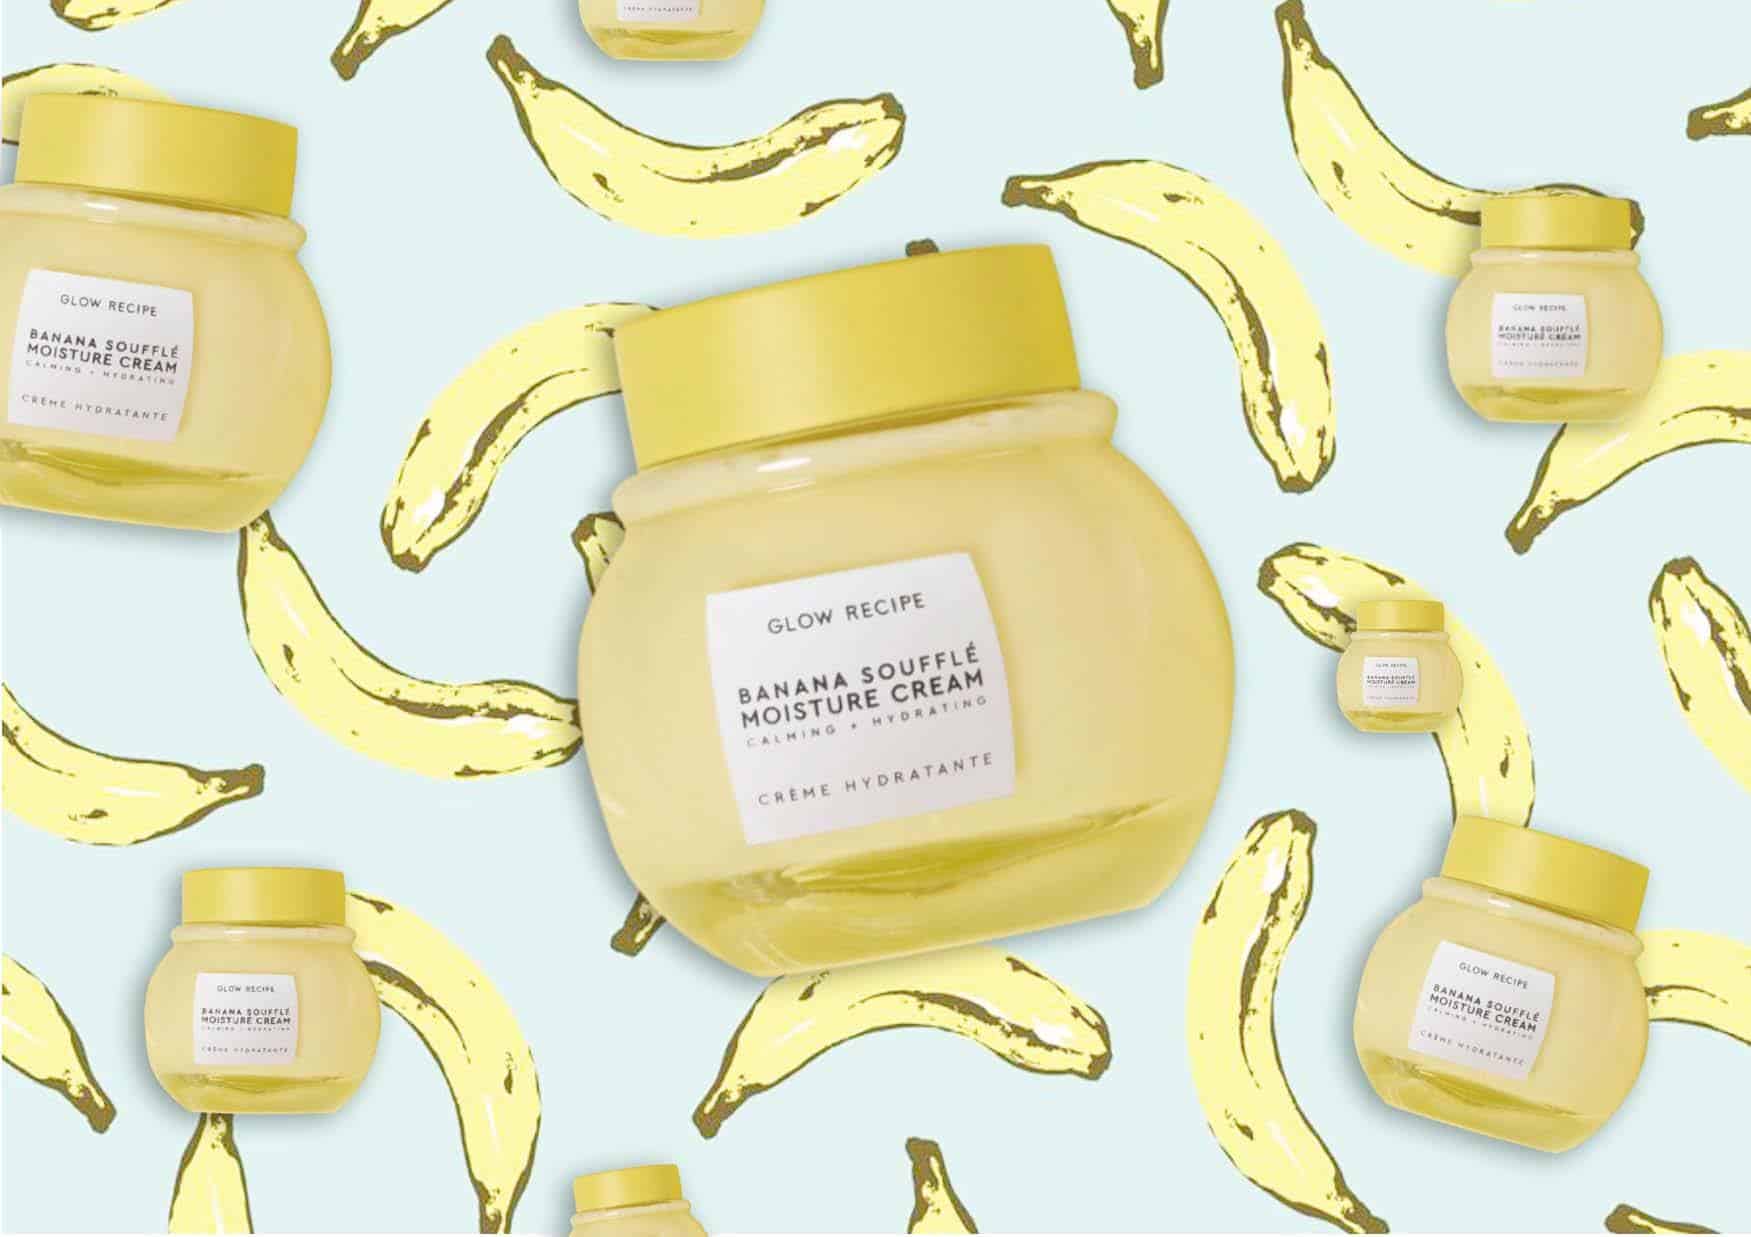 Is Banana The Next Big Thing? Glow Recipe Banana Soufflé Moisture Cream Review